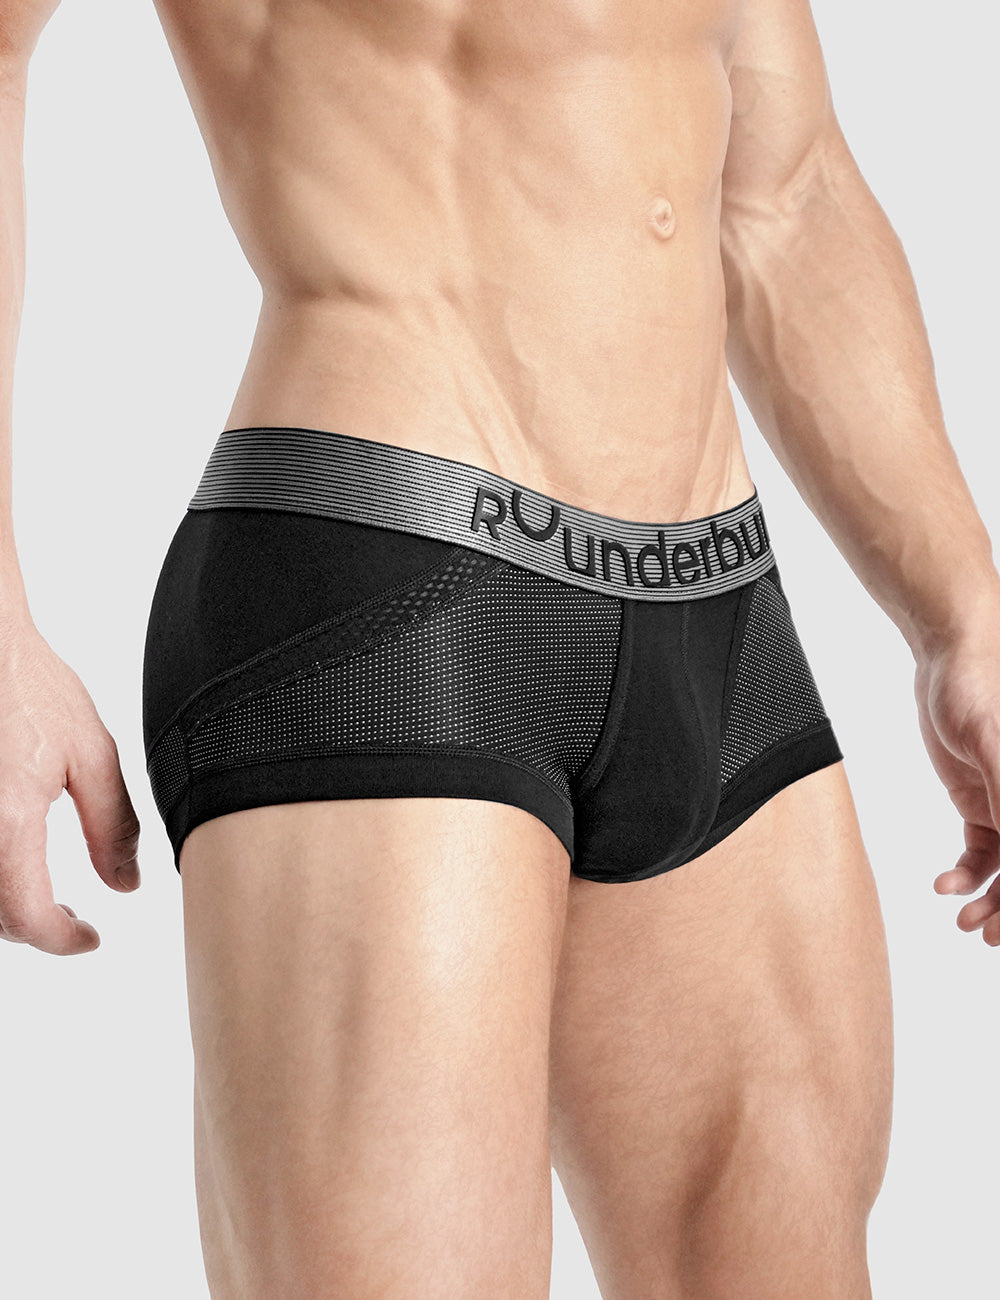 Rounderbum Anatomic Mini Trunk - Underwear Expert